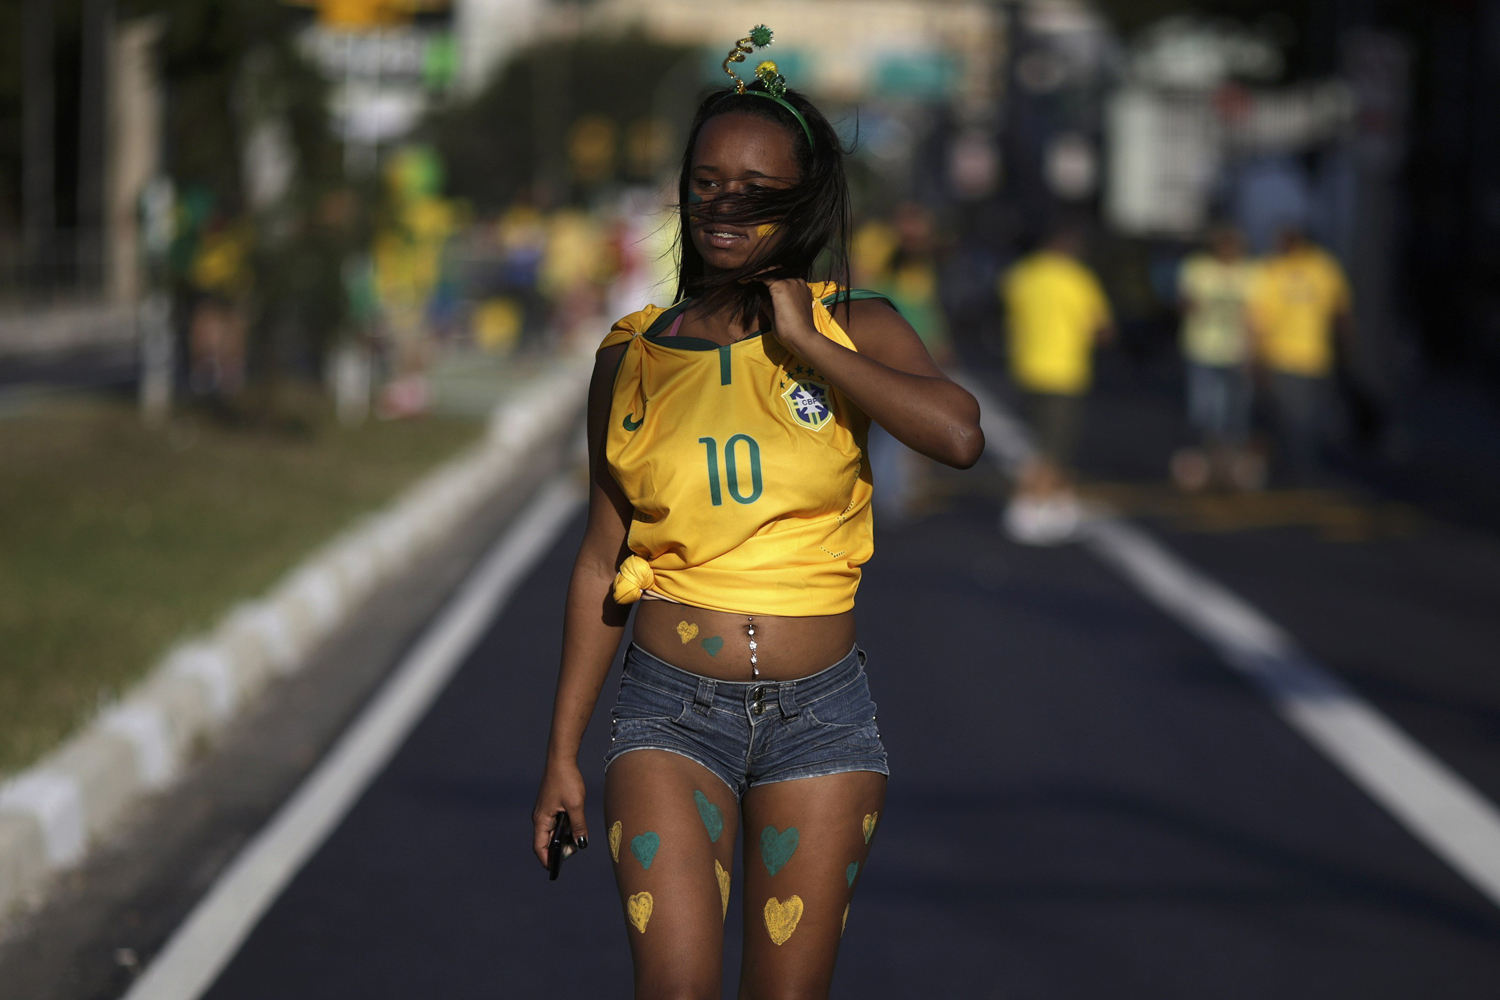 A brazilian soccer fan walks on the street near the Corinthians Arena ahead the 2014 World Cup match between Brazil and Croatia in Sao Paulo